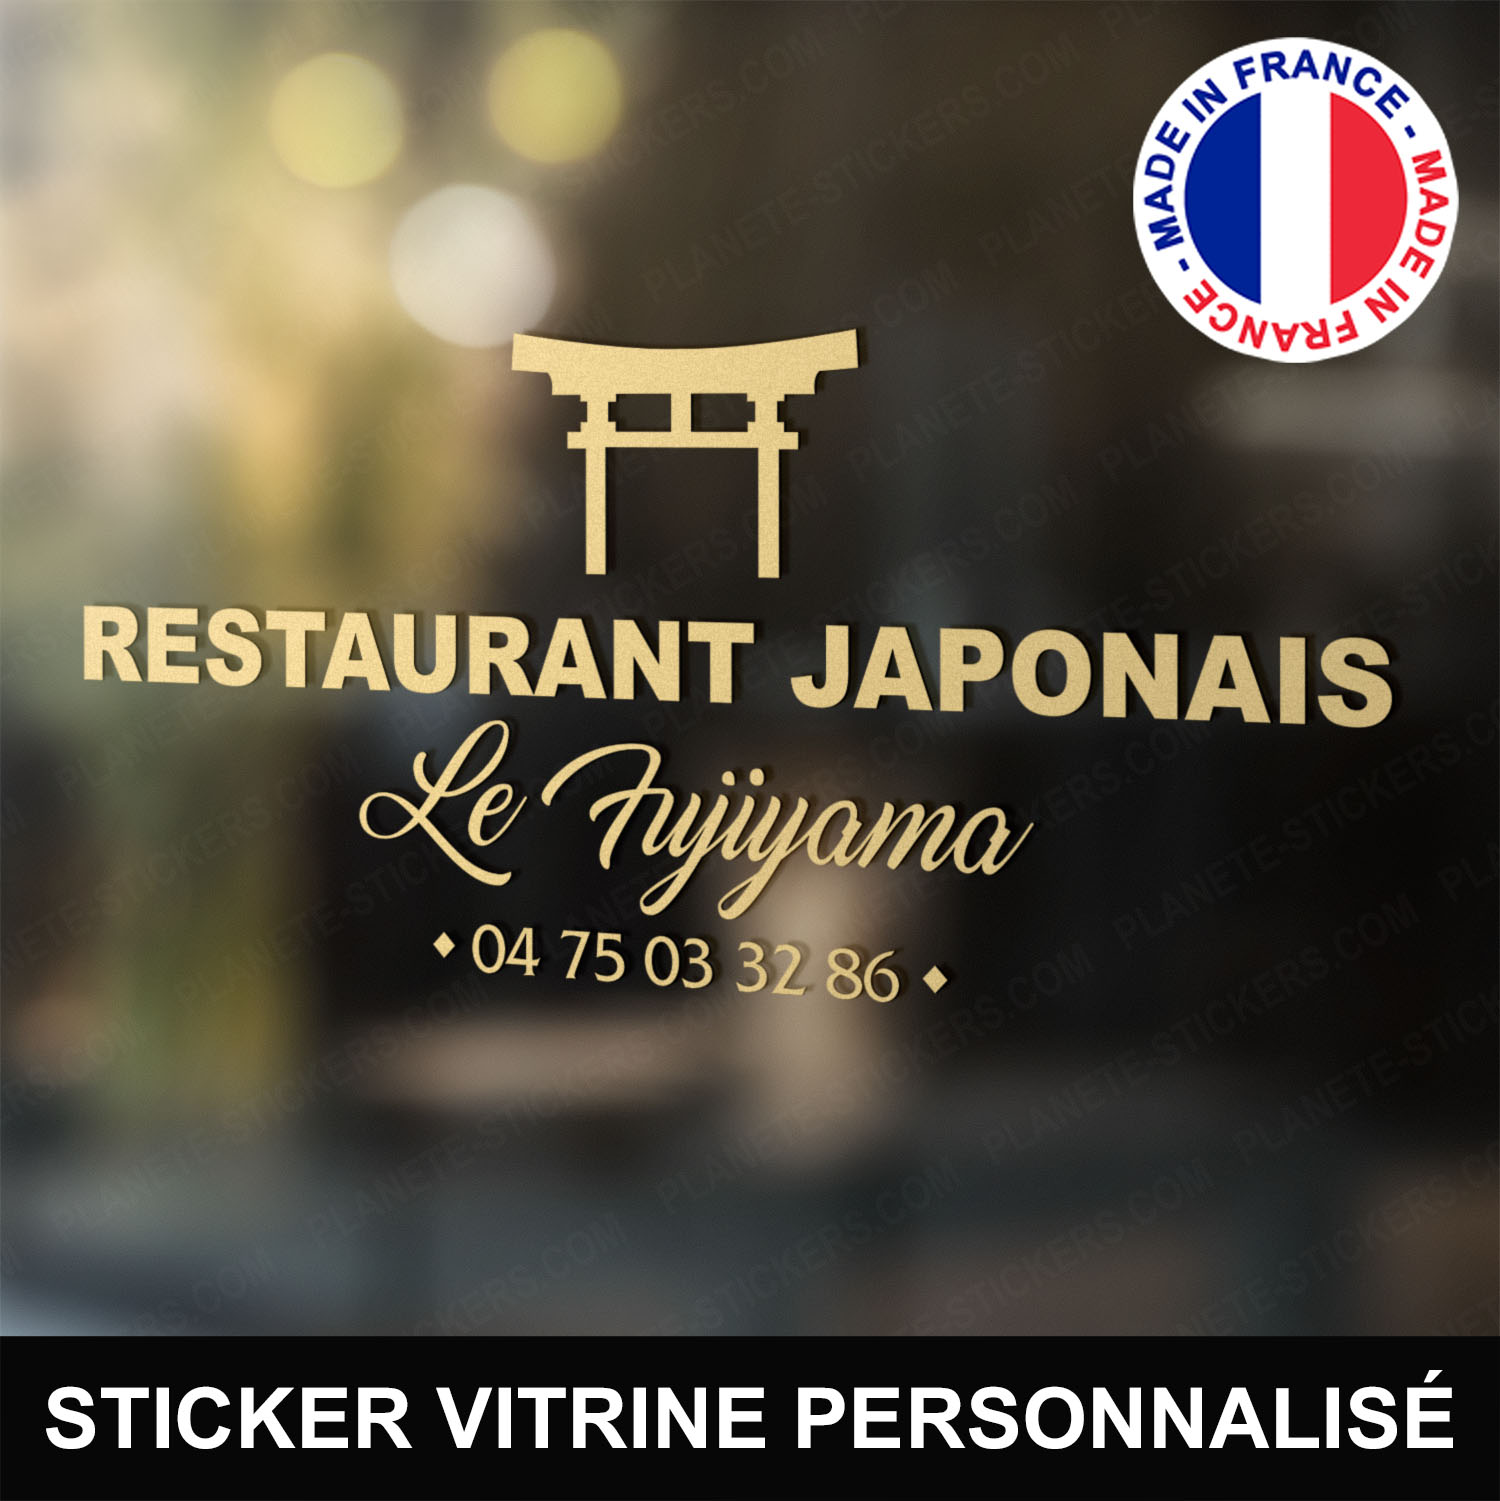 ref24restaurantvitrine-stickers-restaurant-japonais-vitrine-restaurant-sticker-personnalisé-autocollant-pro-restaurateur-vitre-resto-professionnel-logo-tori